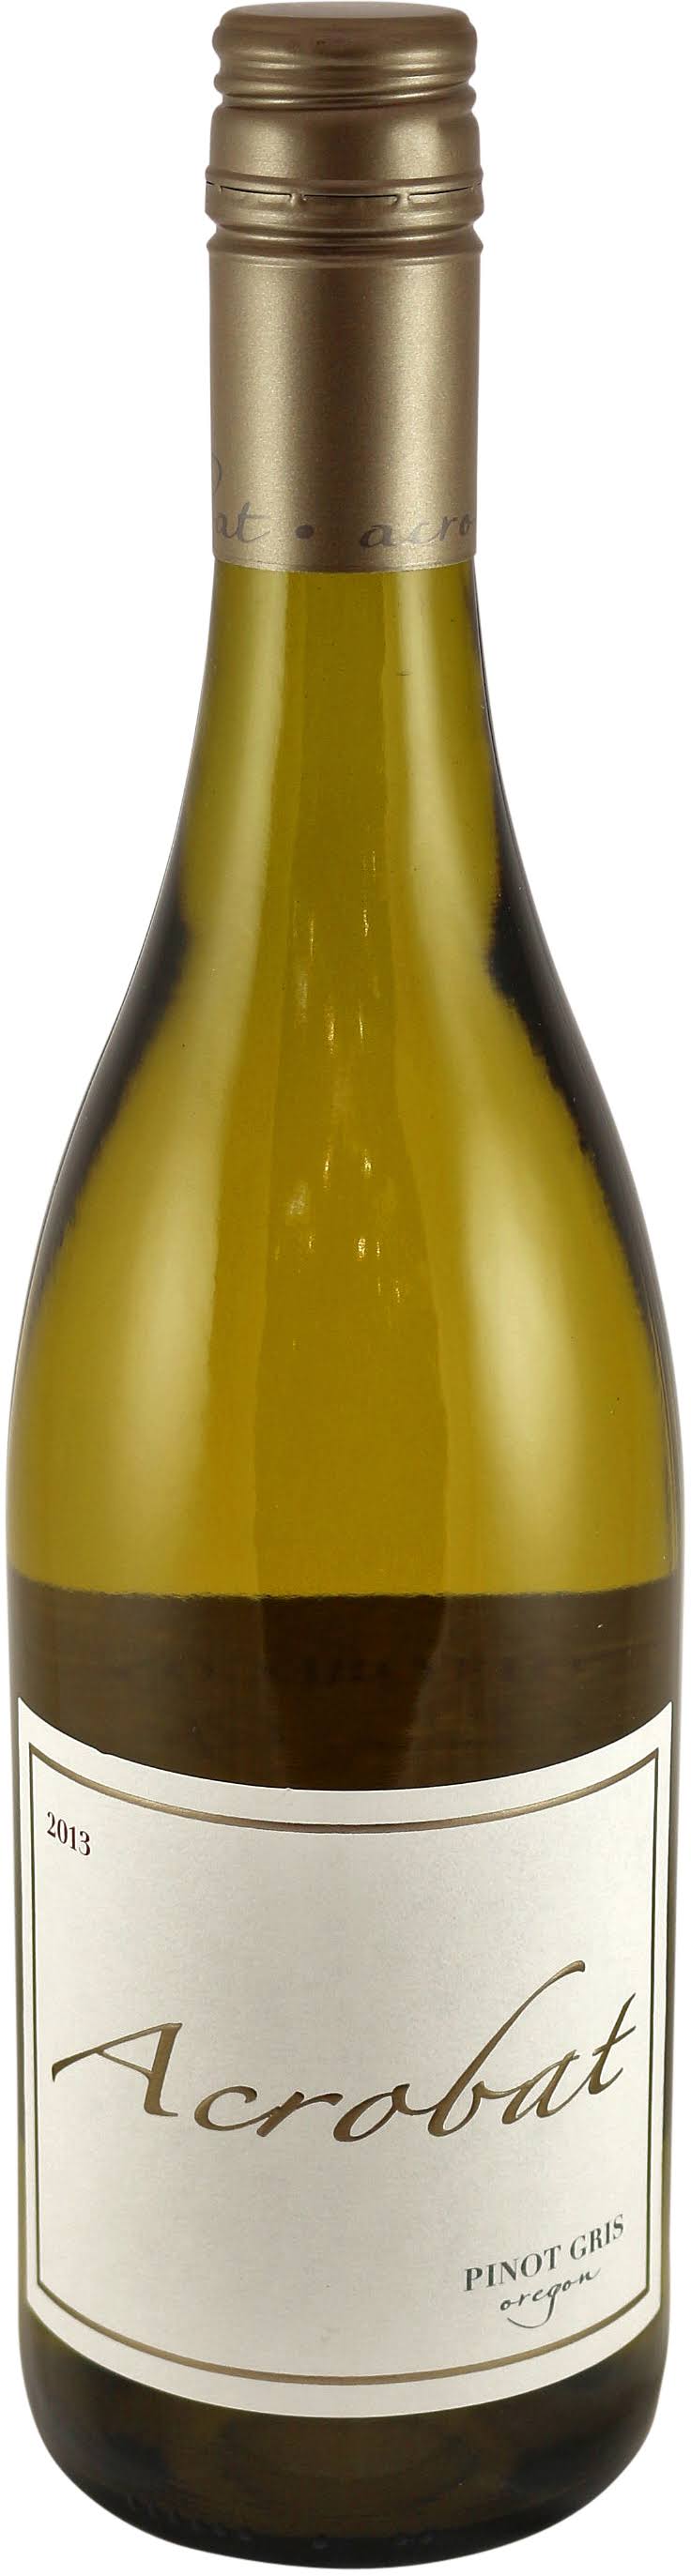 Acrobat Pinot Gris, Oregon - 750 ml